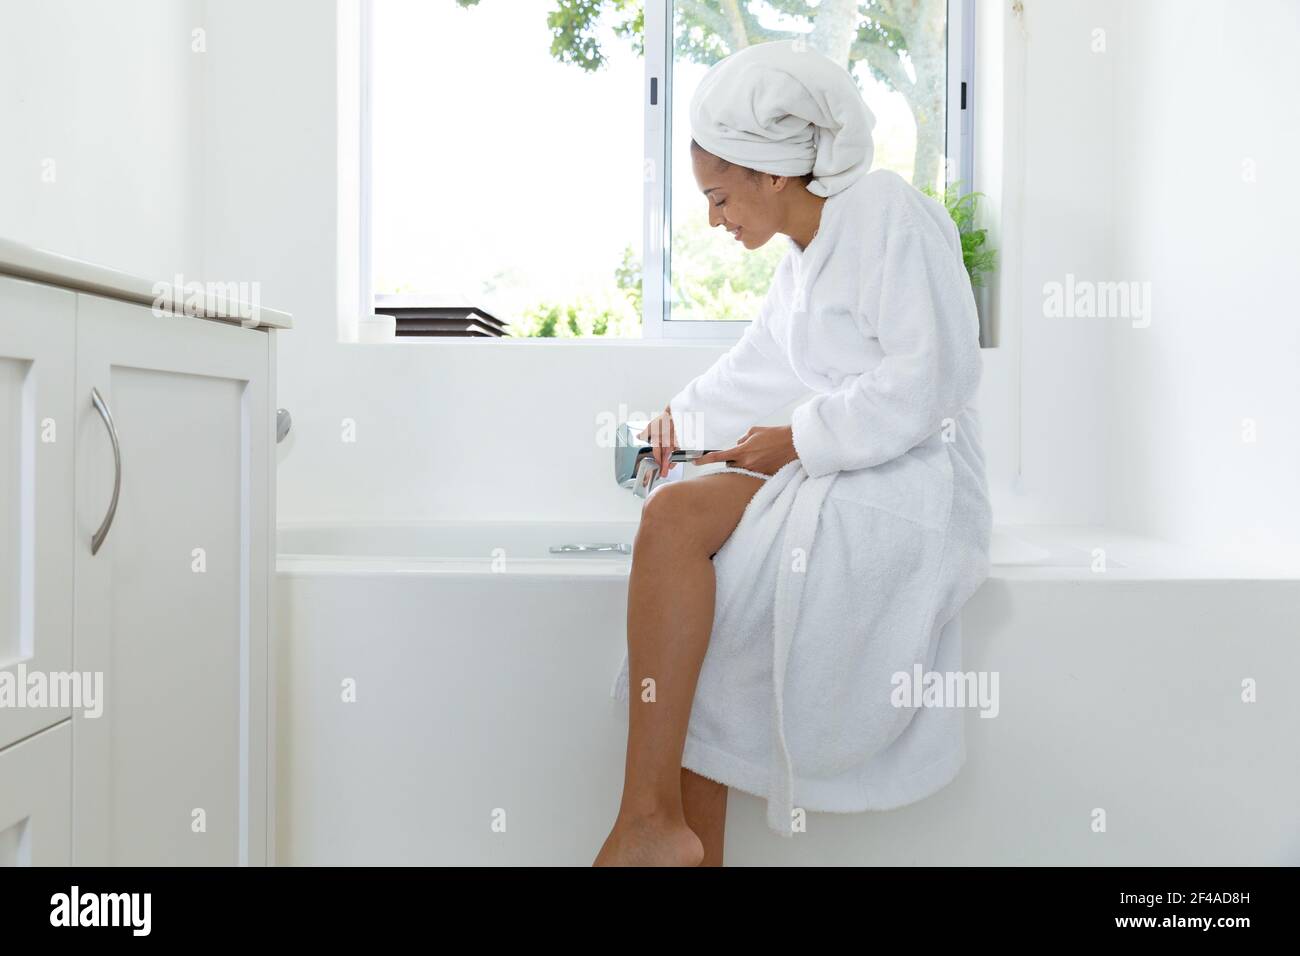 Mixed race woman wearing bathrobe sitting on bathtub edge in bathroom Stock Photo